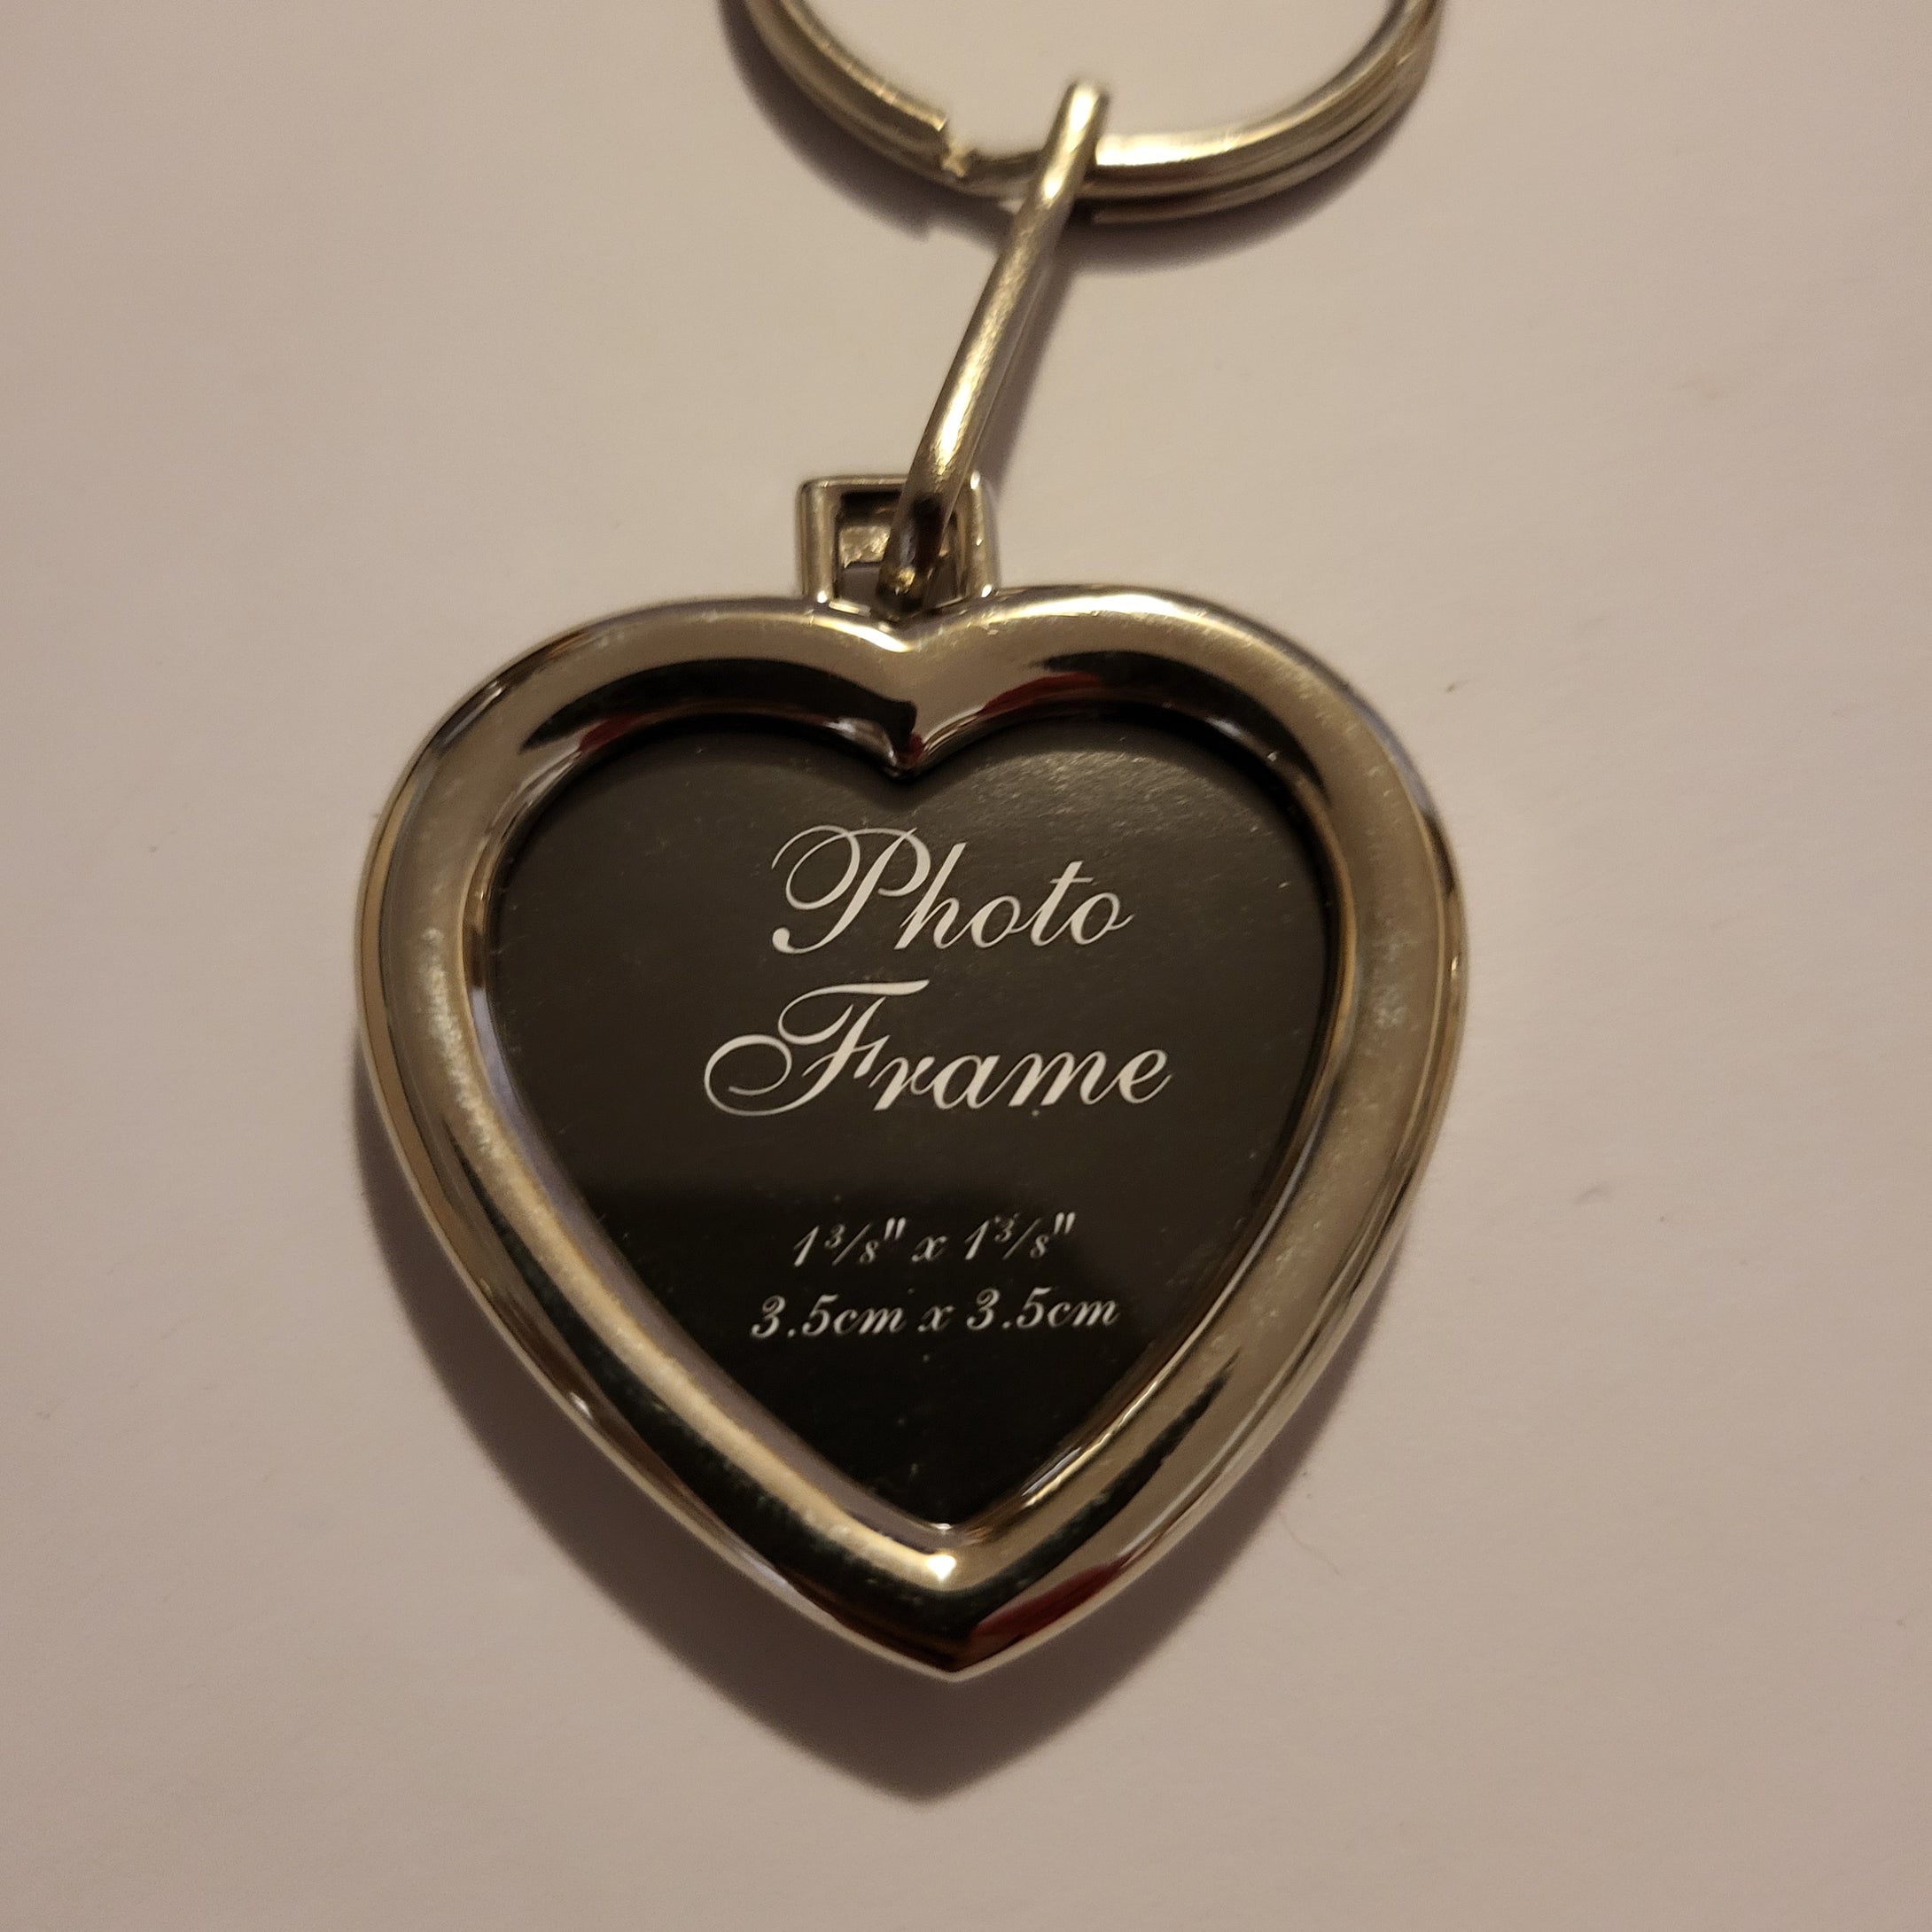 Heart shaped photo keychain